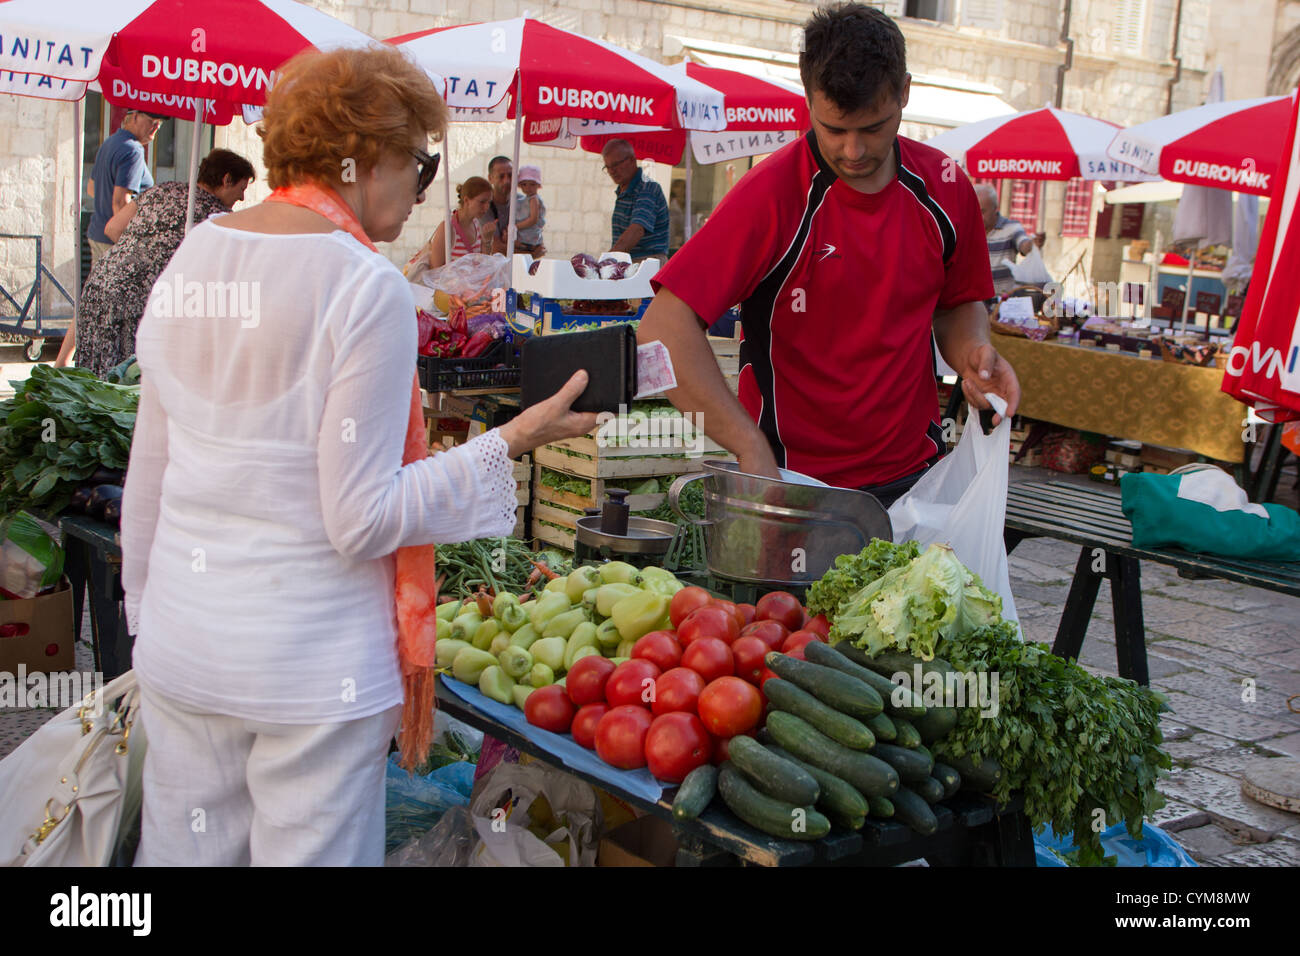 Shoppers in Dubrovnik city market. Croatia Stock Photo